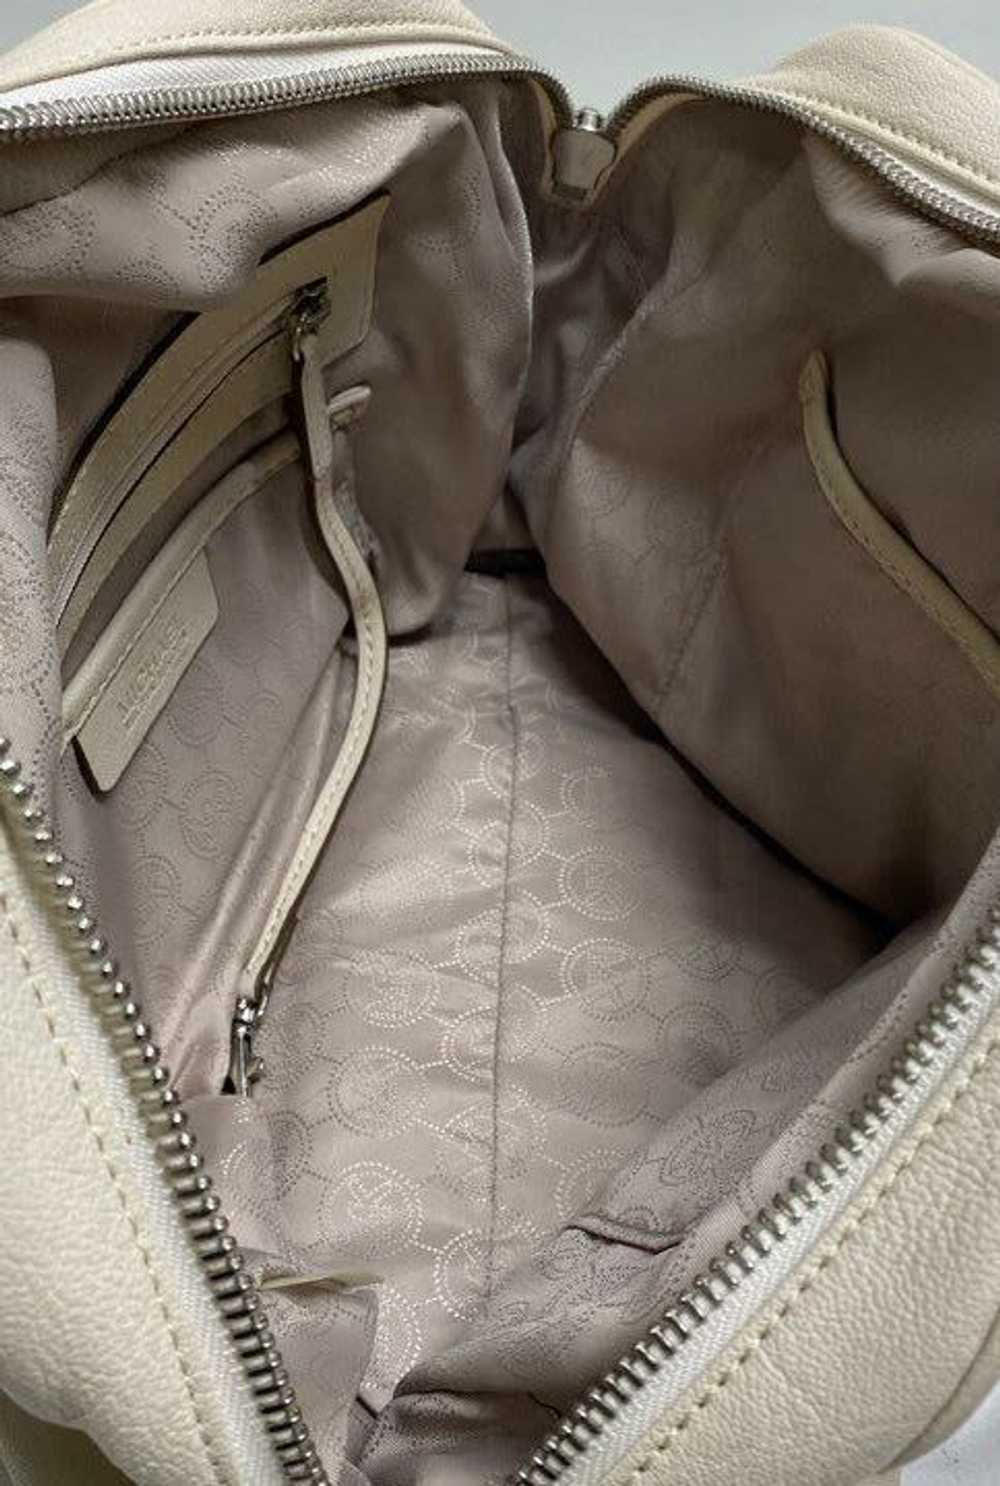 Michael Kors Shoulder Bag Cream - image 5